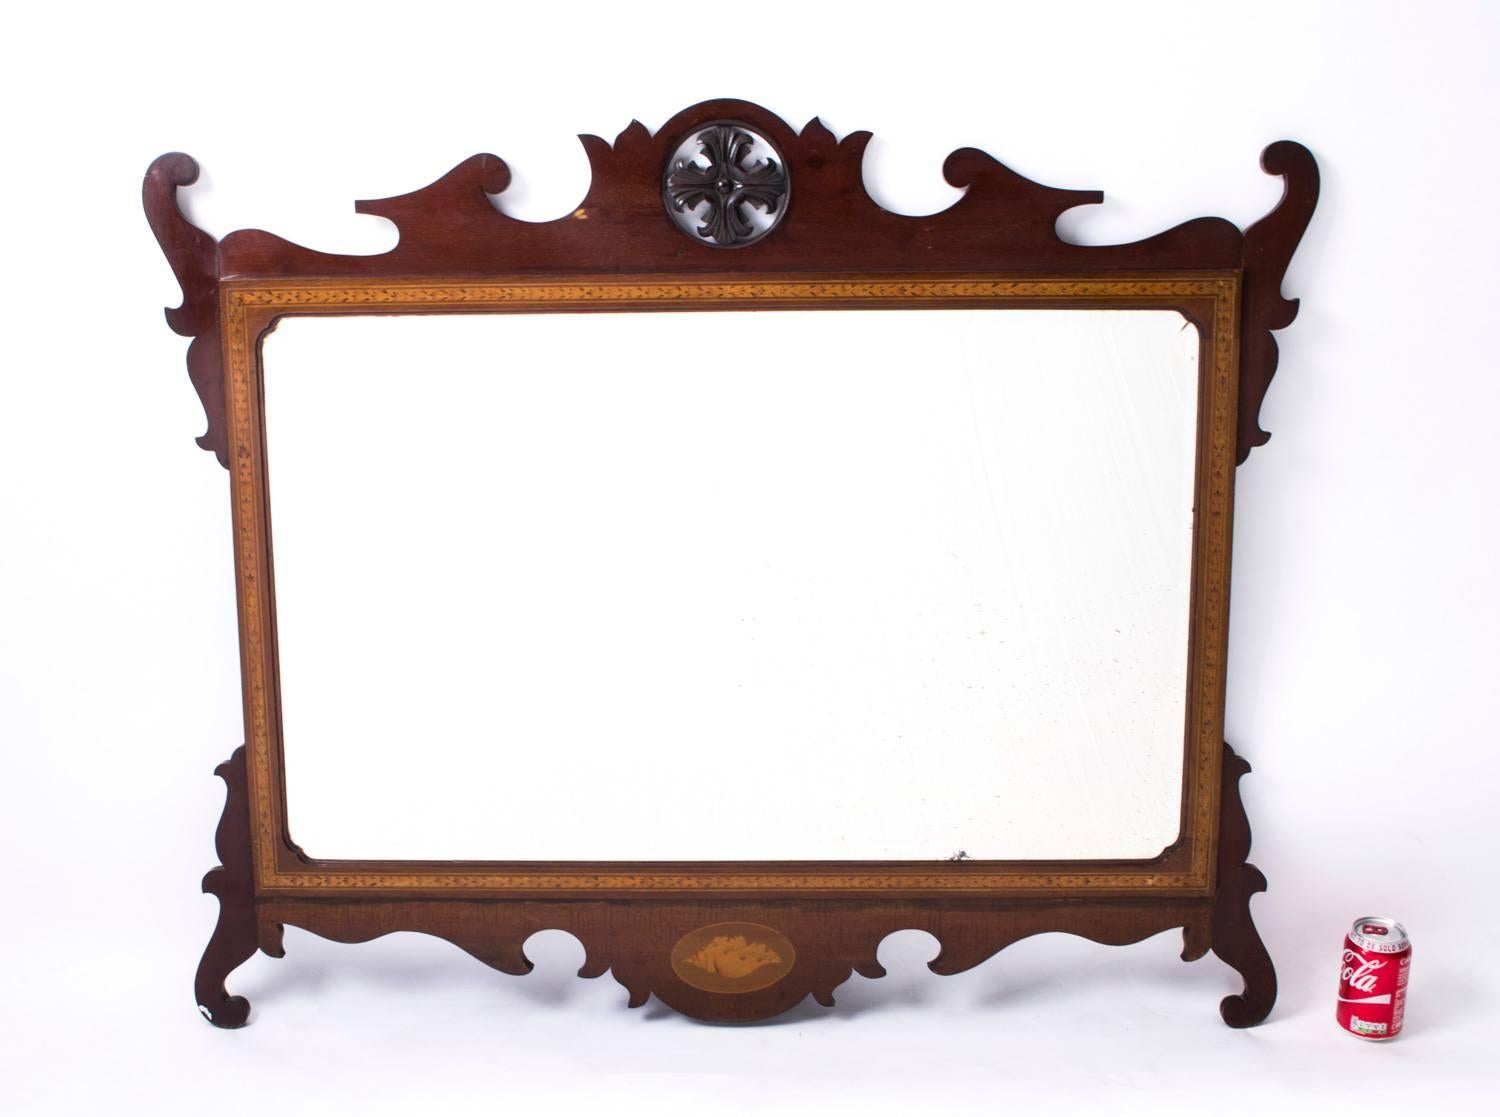 Early 20th Century Edwardian Mahogany Inlaid Marquetry Mirror - 93 x 113 cm 3